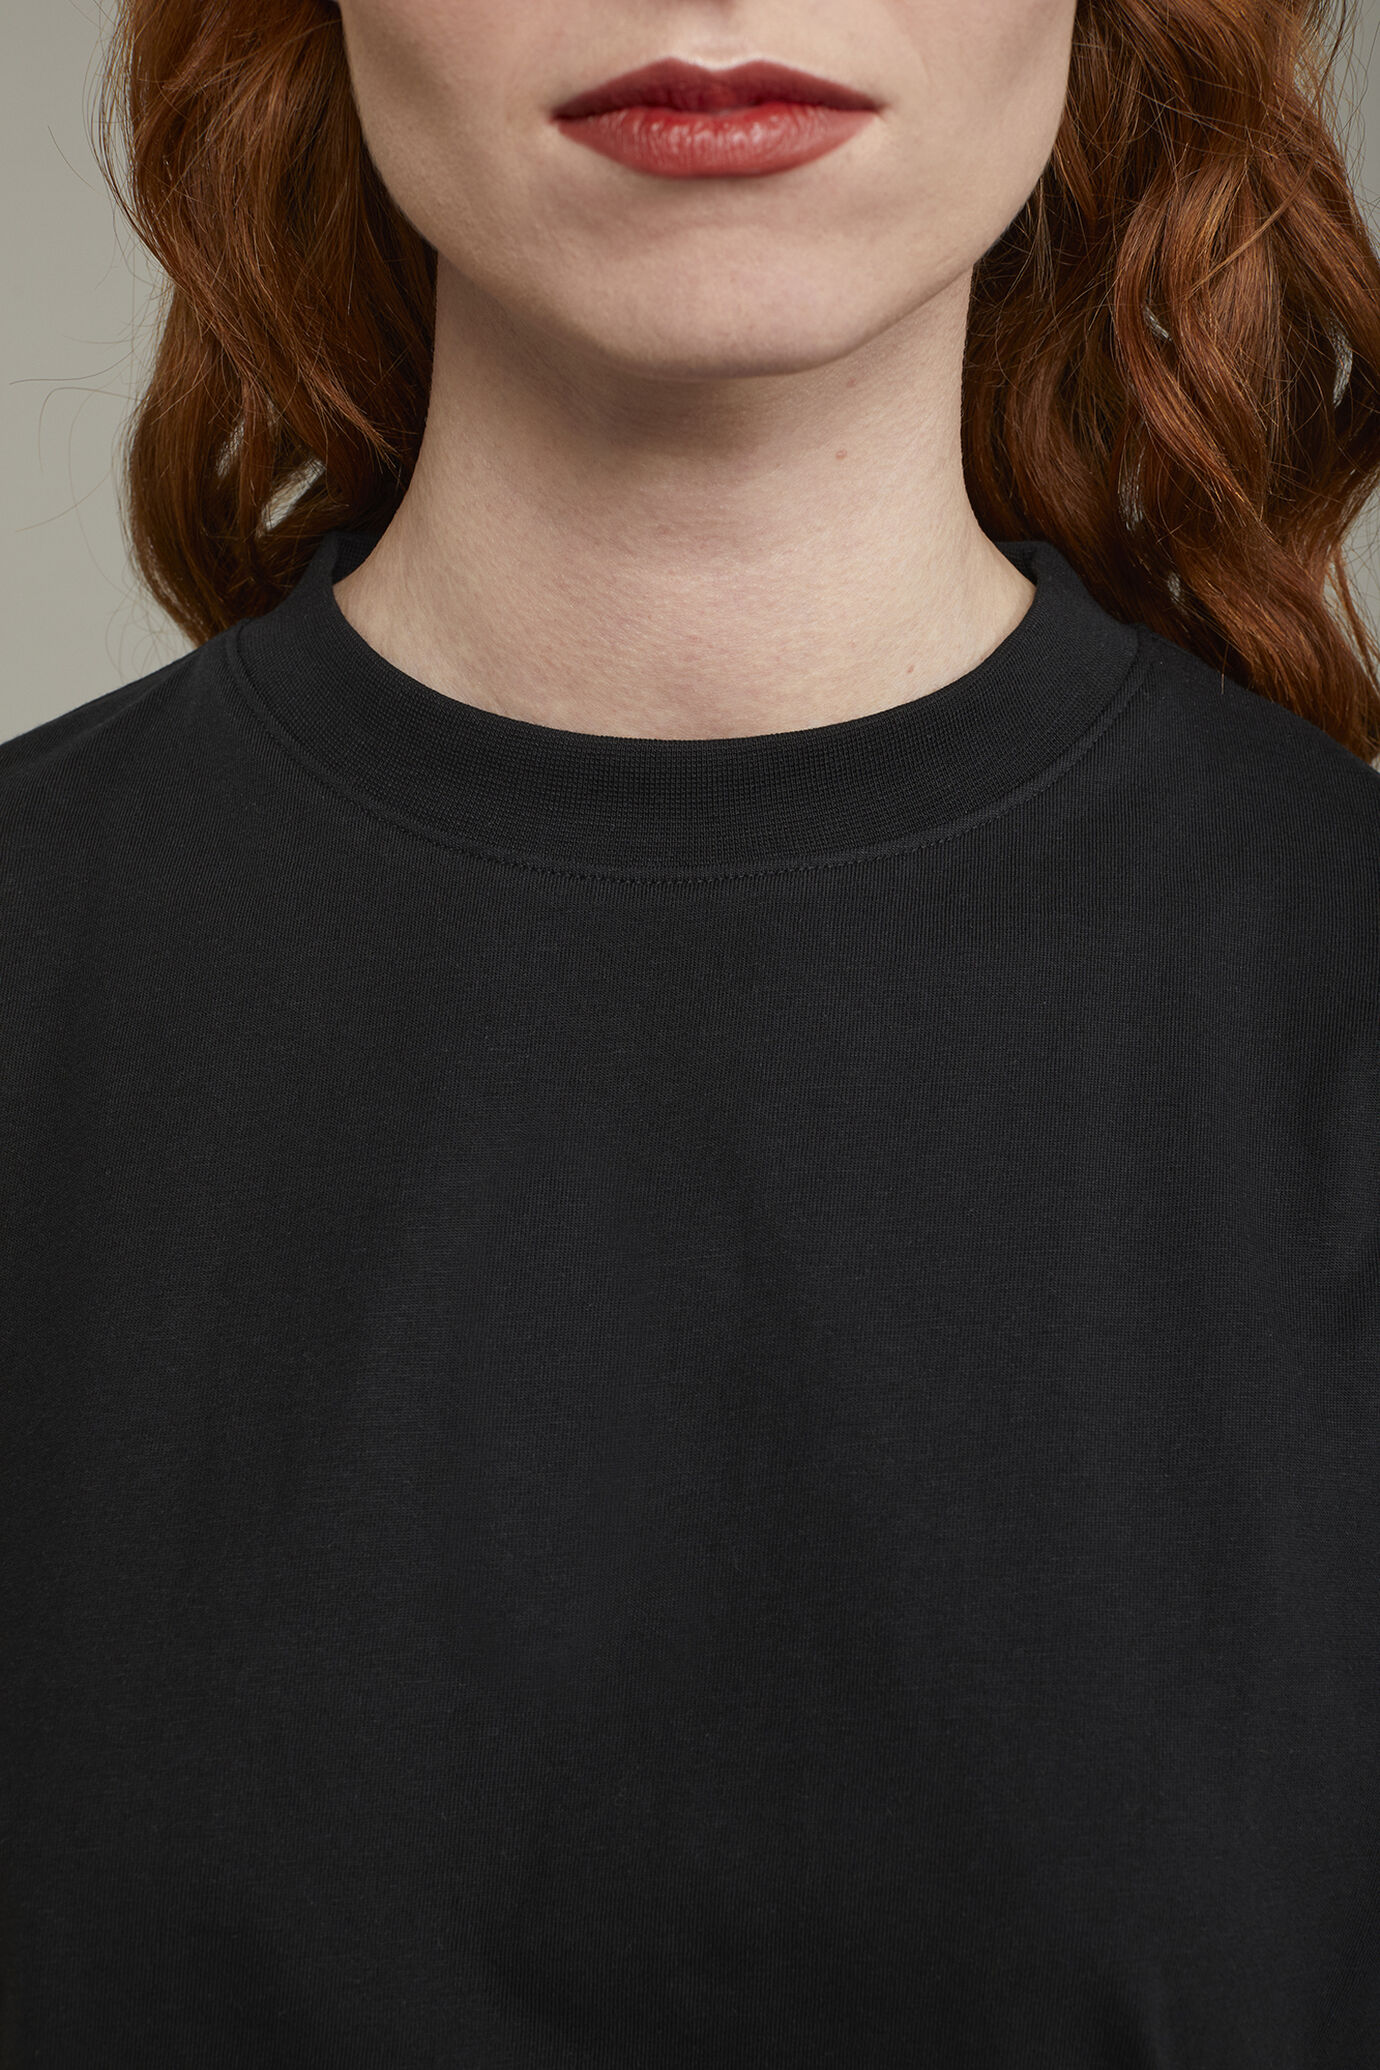 Women’s round neck t-shirt 100% cotton regular fit image number 3